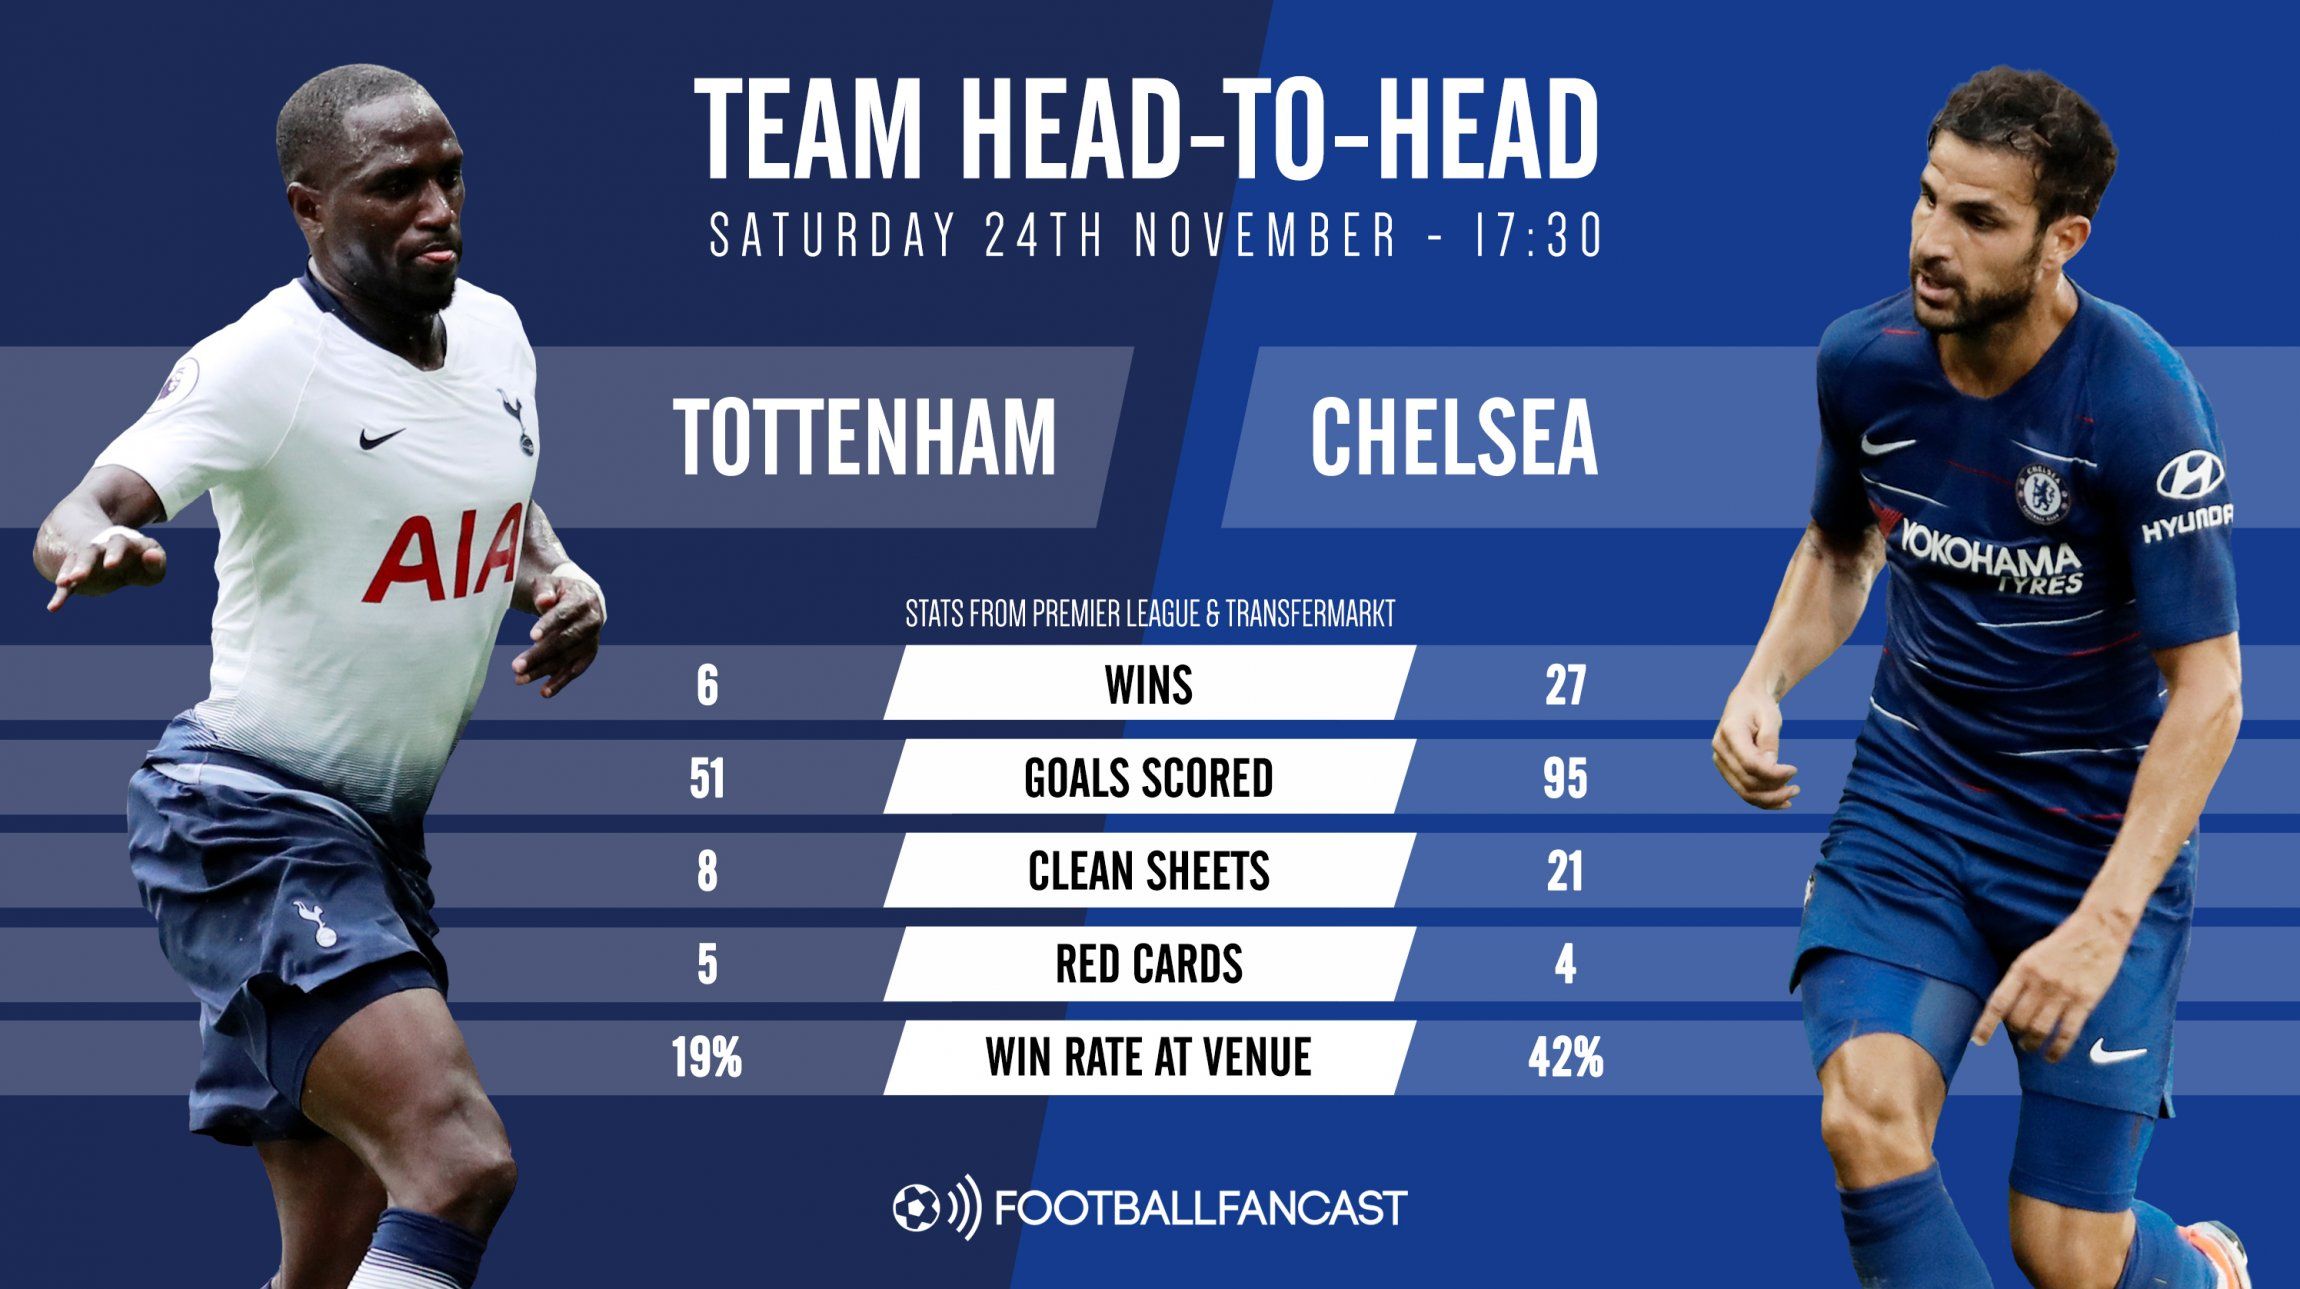 Team Head-to-Head - Tottenham vs Chelsea